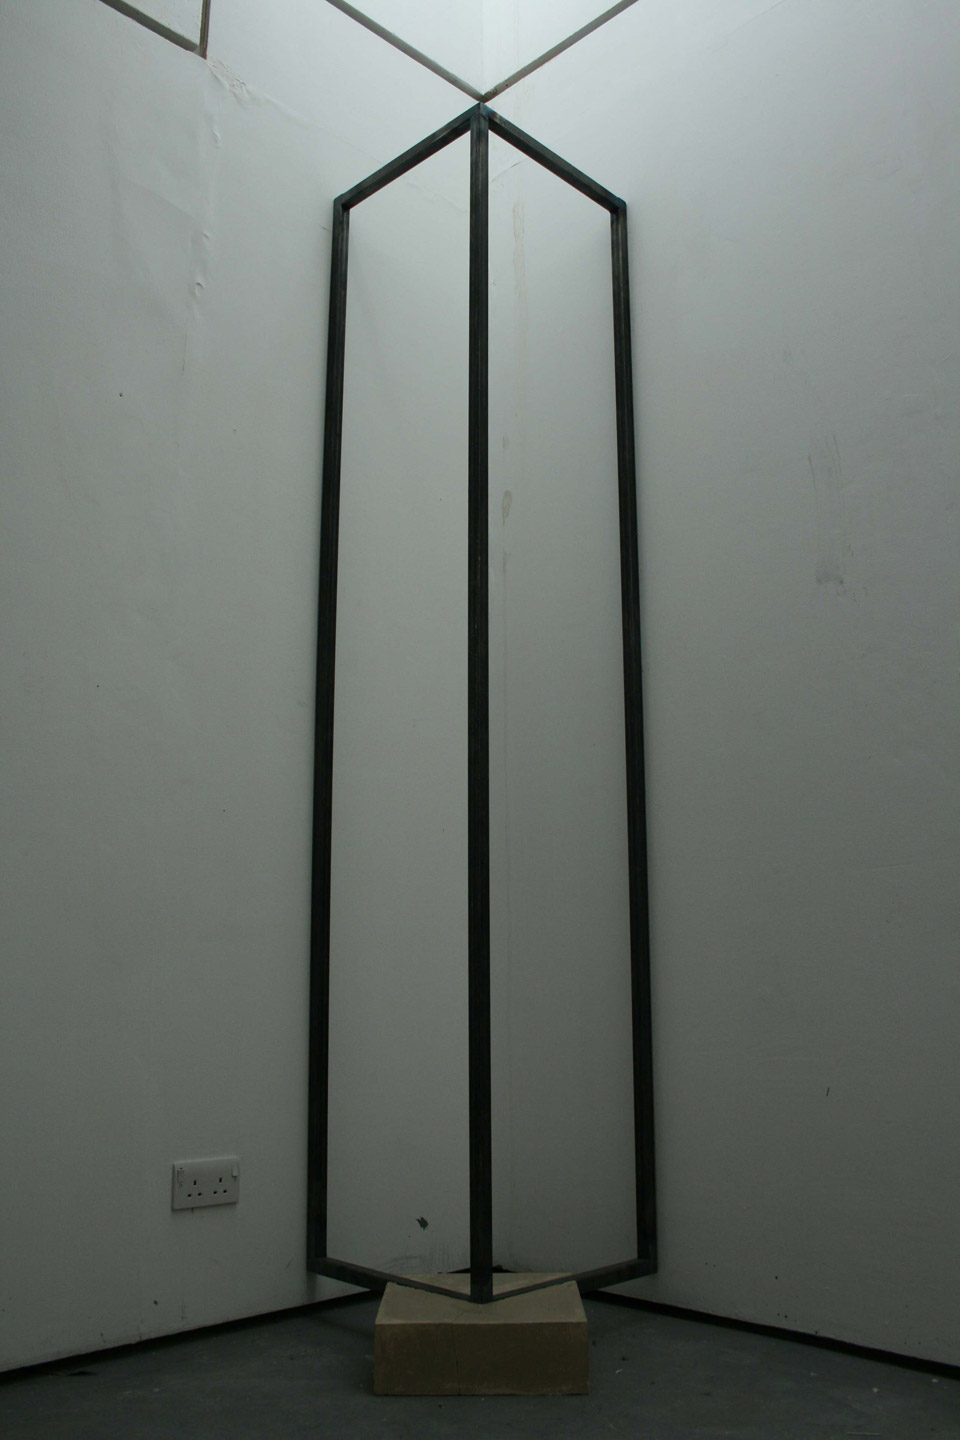 <p>Untitled (Interdependent Series), 2011, mixed media, 260 x 90 cm</p>